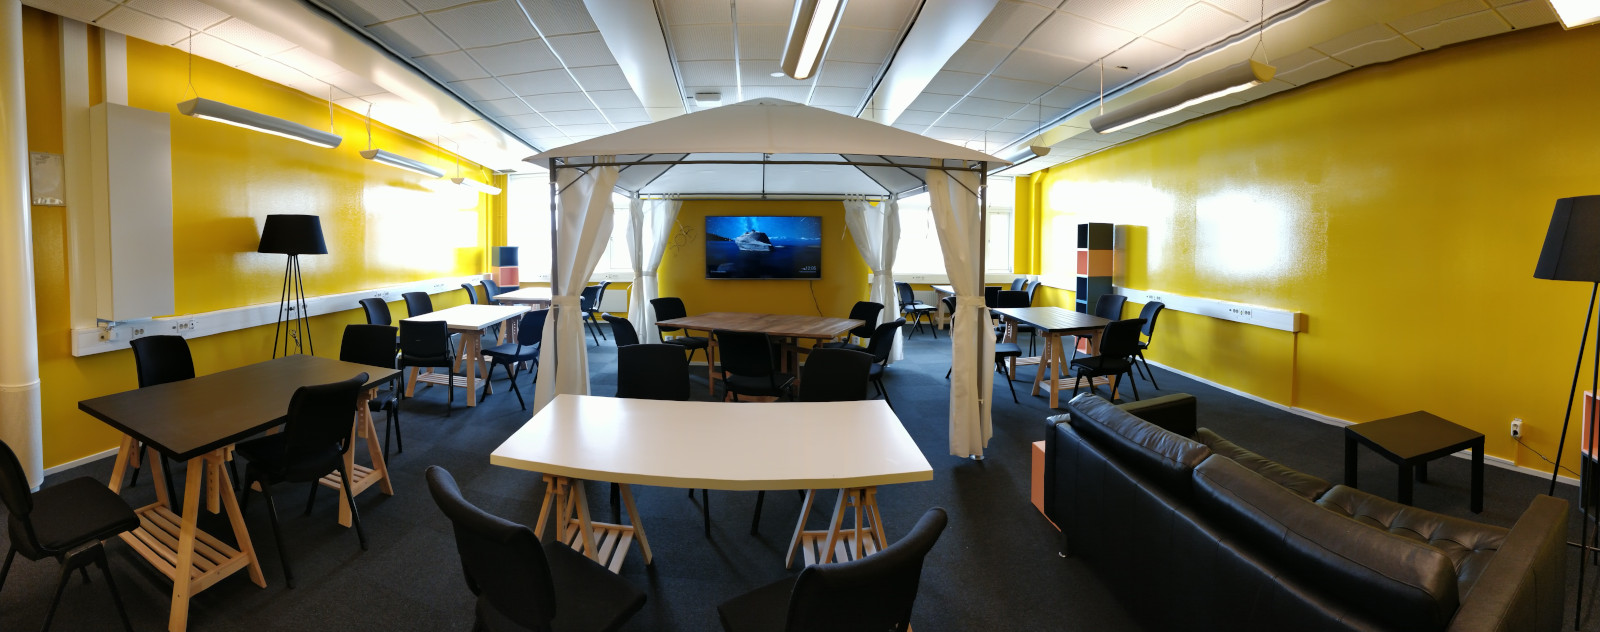 Yellow Room in Apr 2018, Biglee, Jönköping International Business School